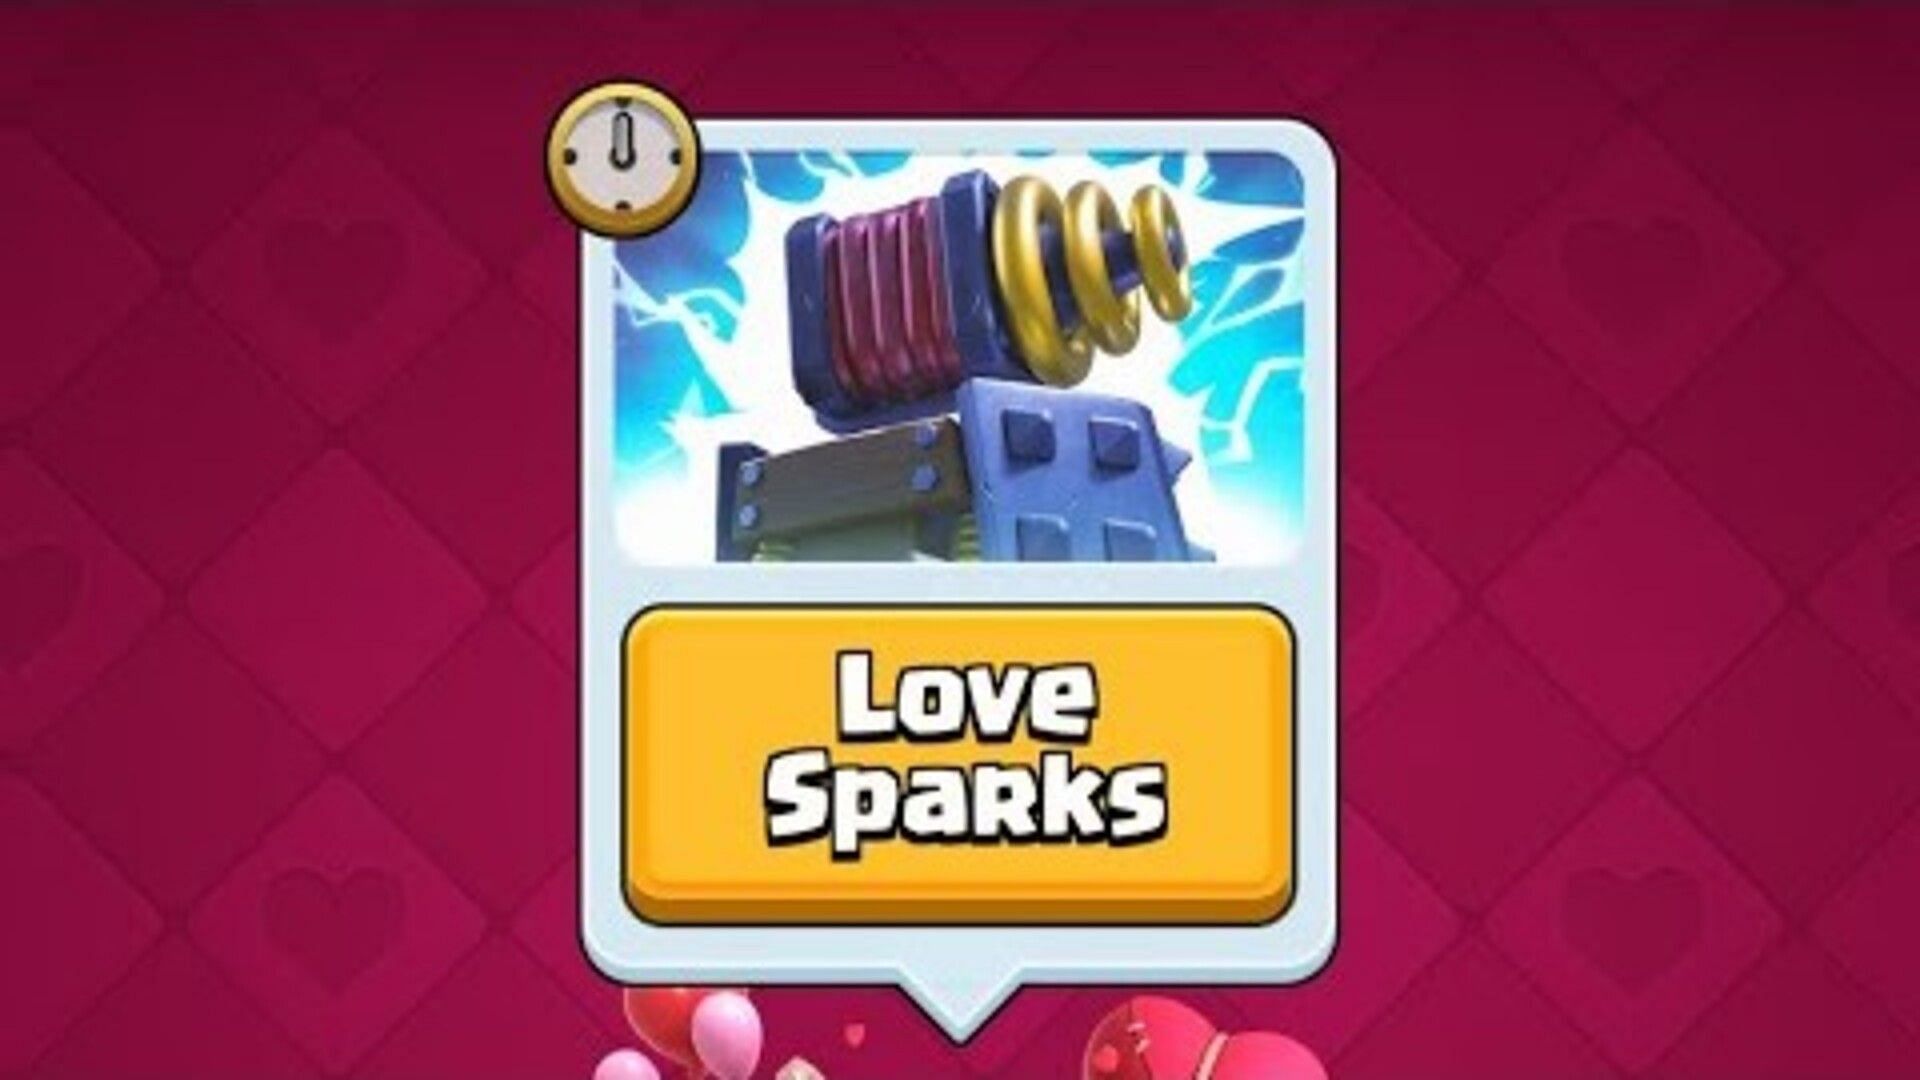 best clash royale decks for love sparks challenge